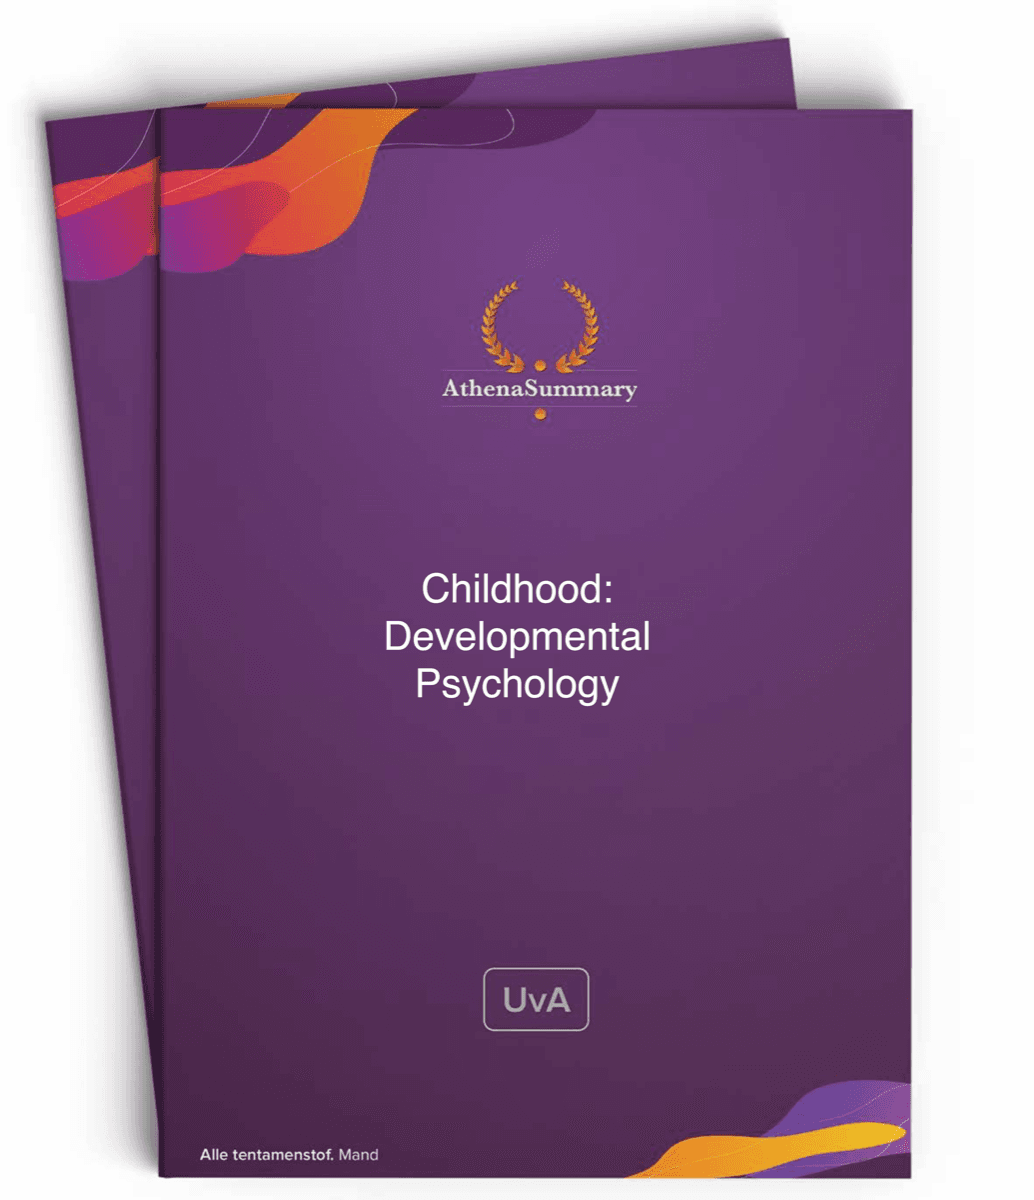 Literature Summary: Childhood: Developmental Psychology